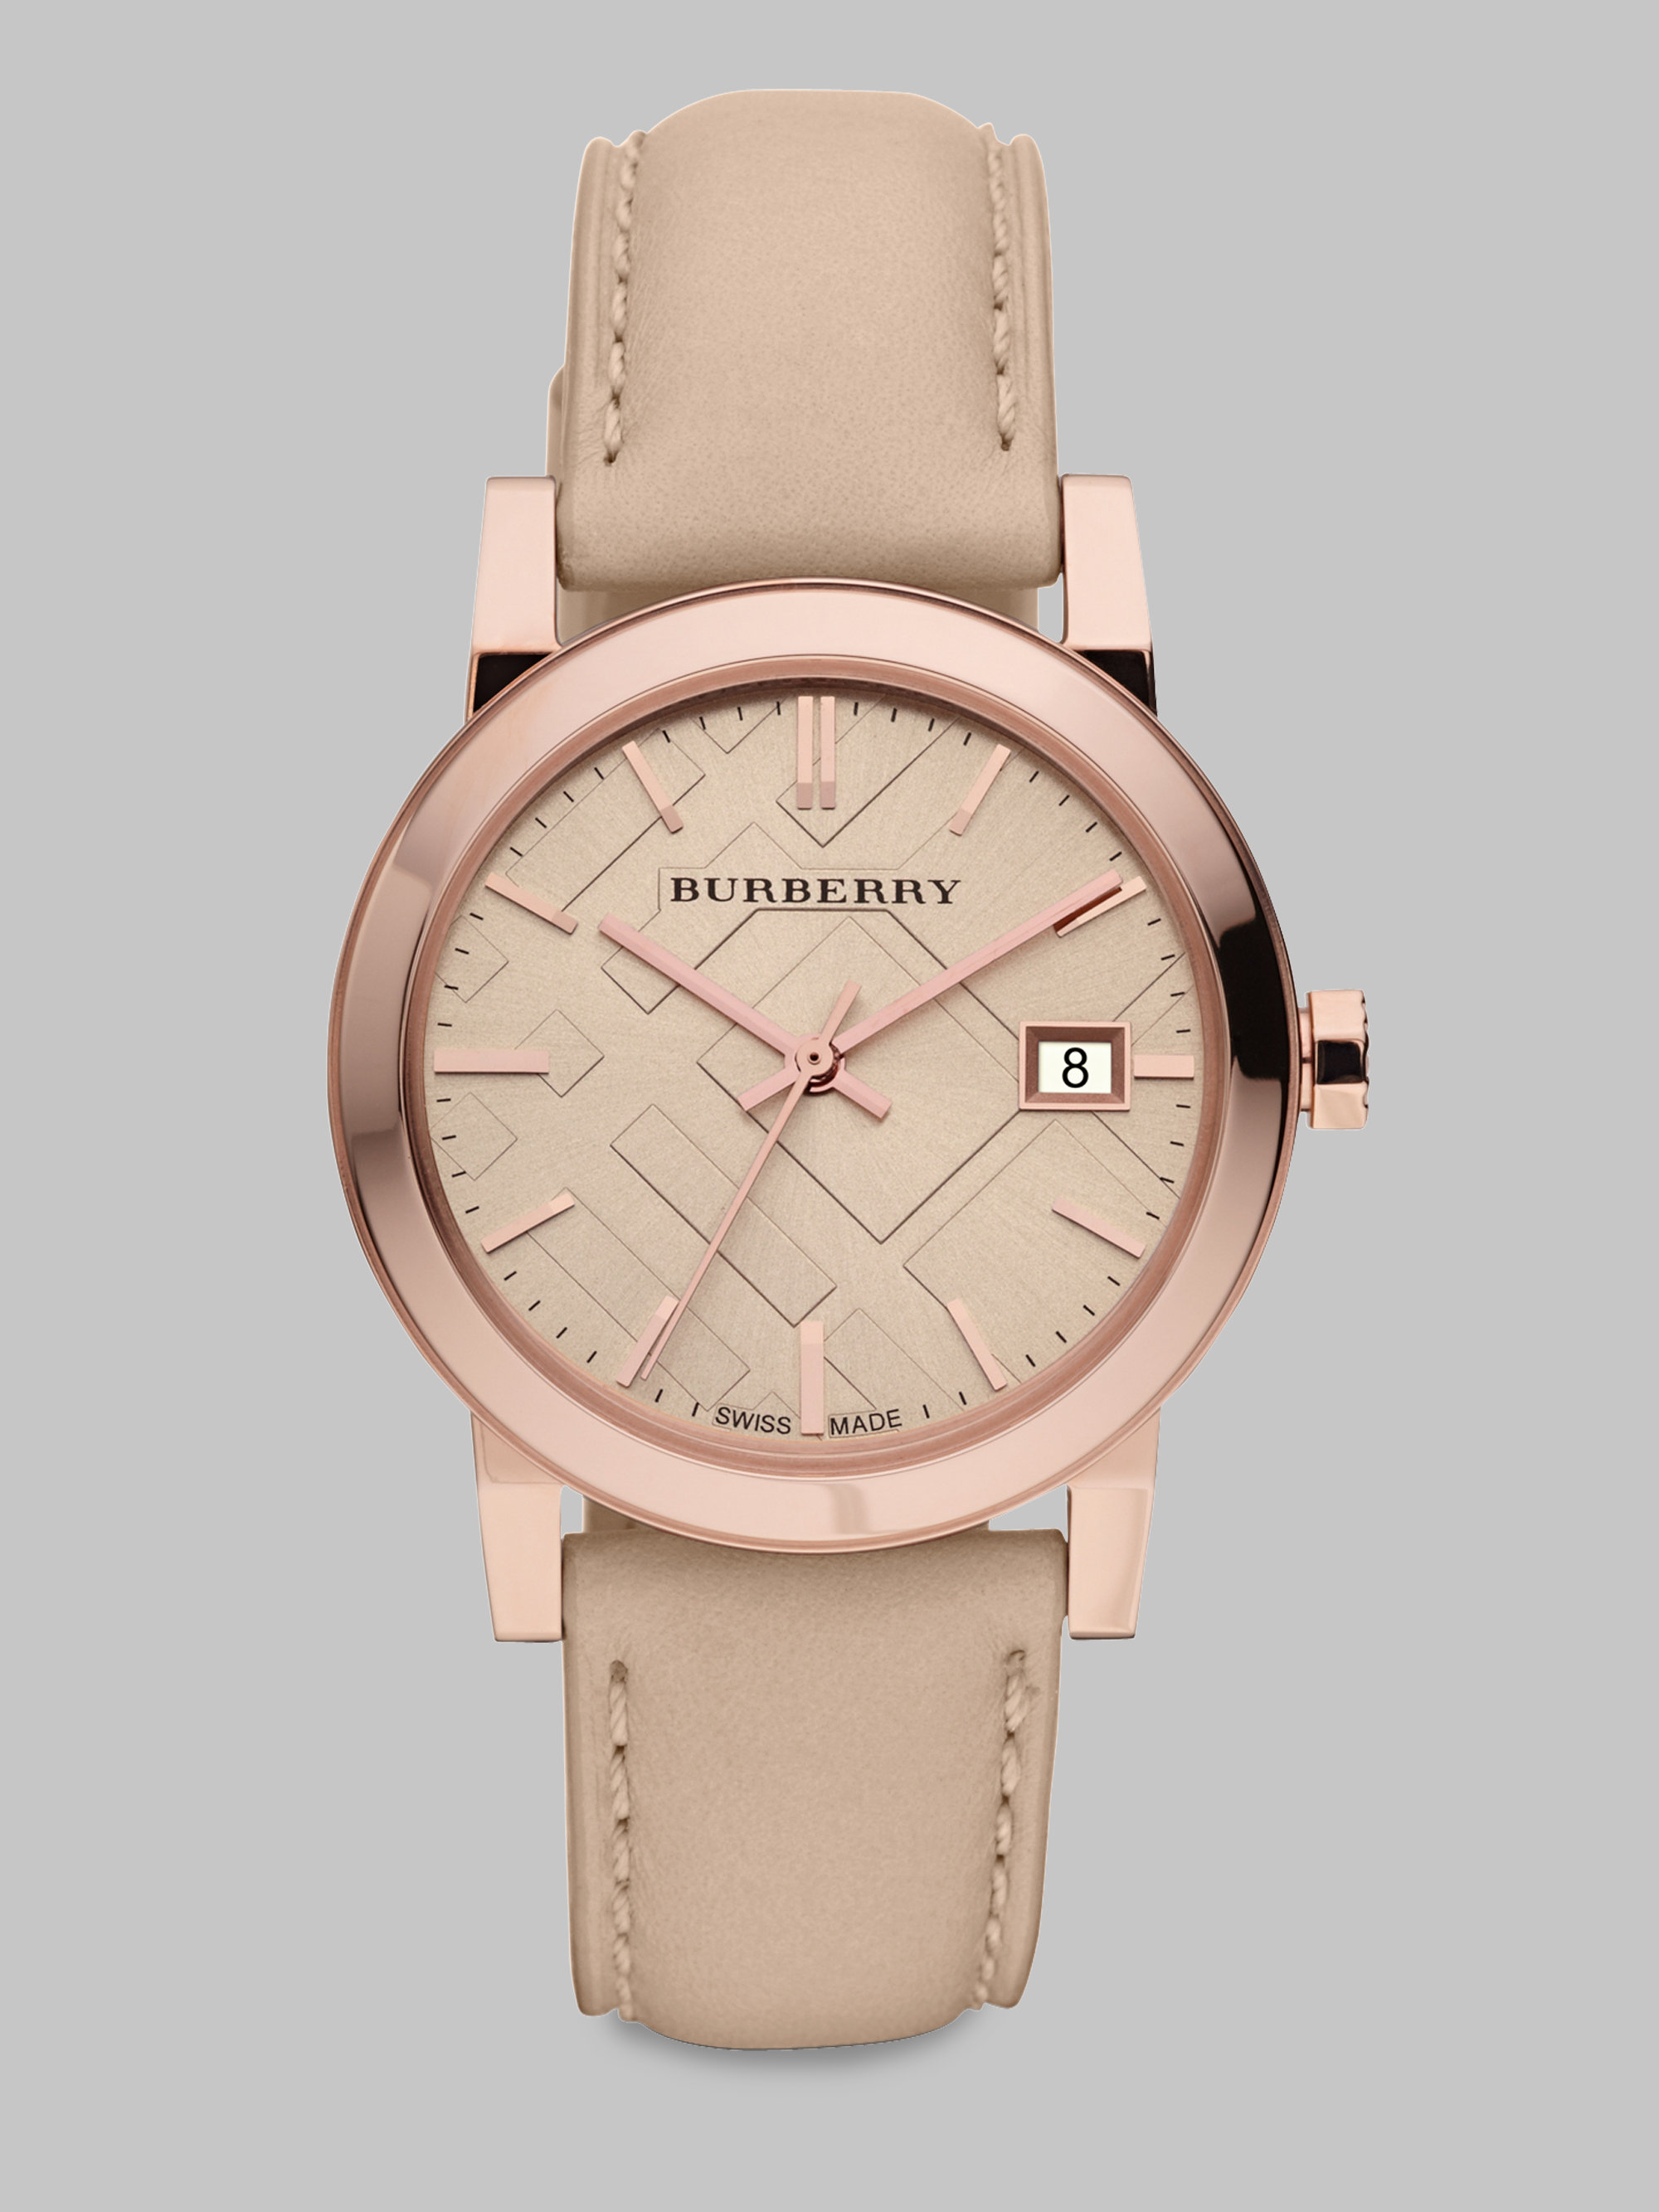 burberry analog watch